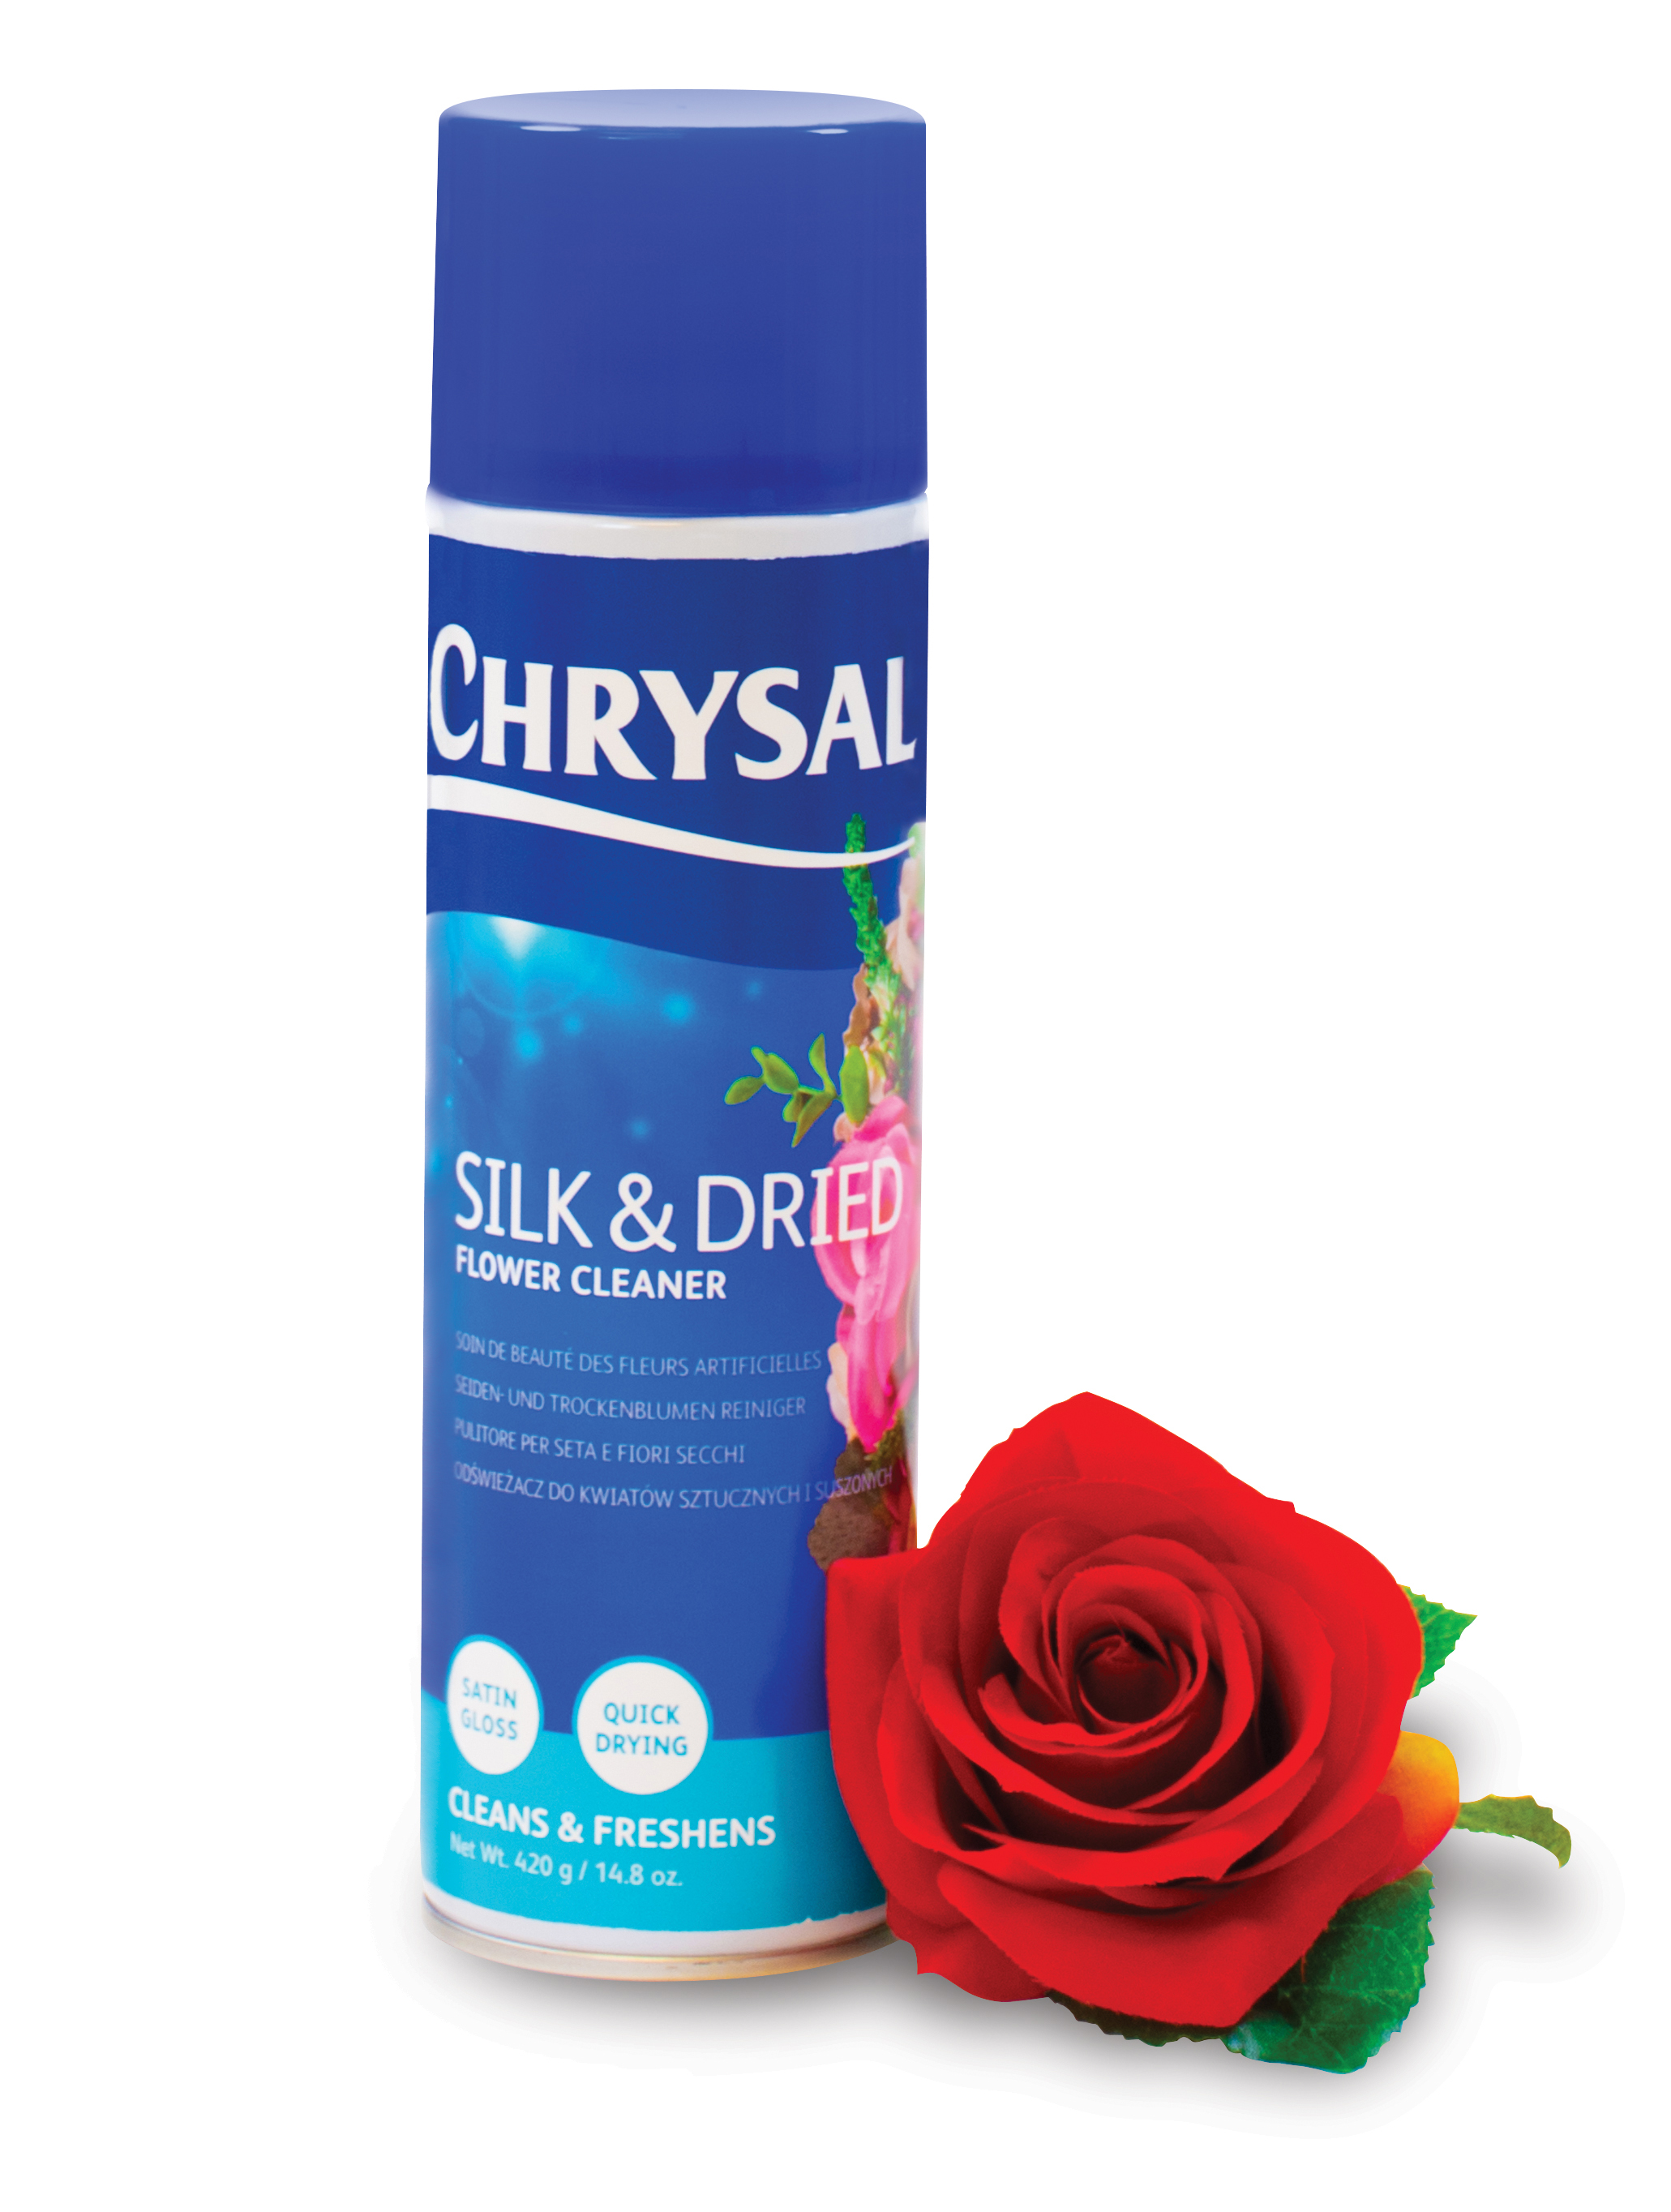 FloraCraft Silk Plant Cleaner Spray - 24 oz.